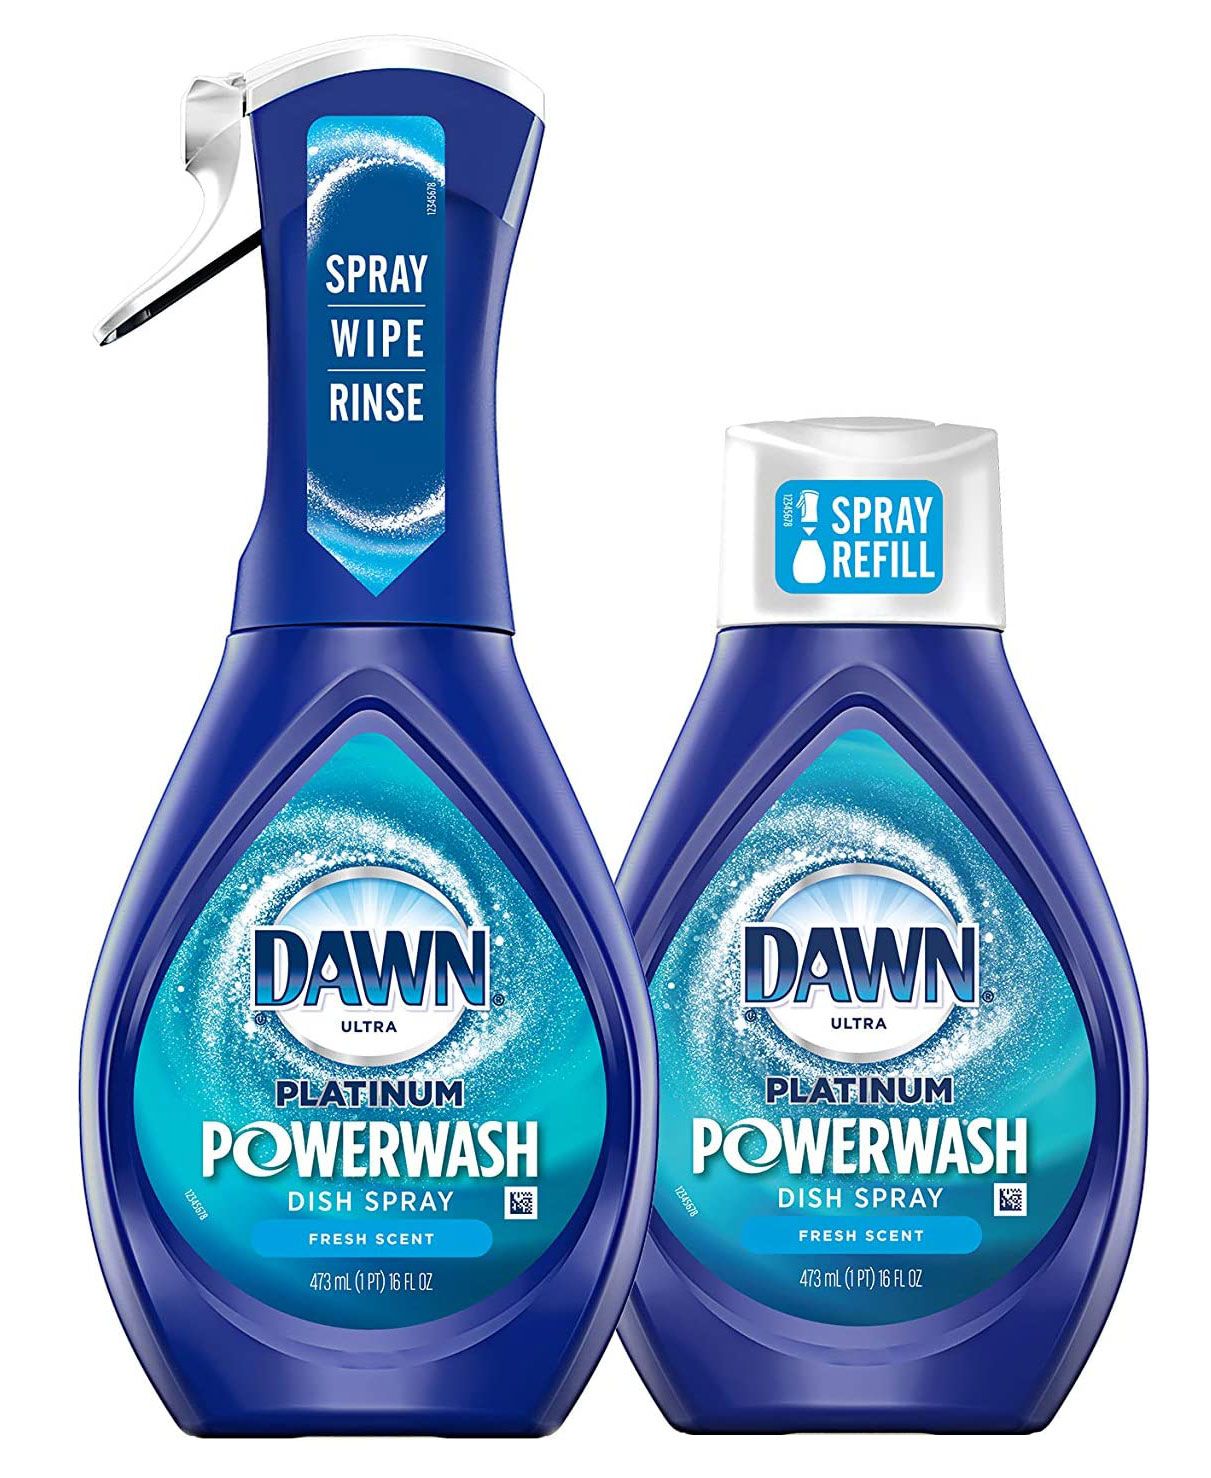 Na stuthan as glice 2020 - Dawn Platinum Powerwash